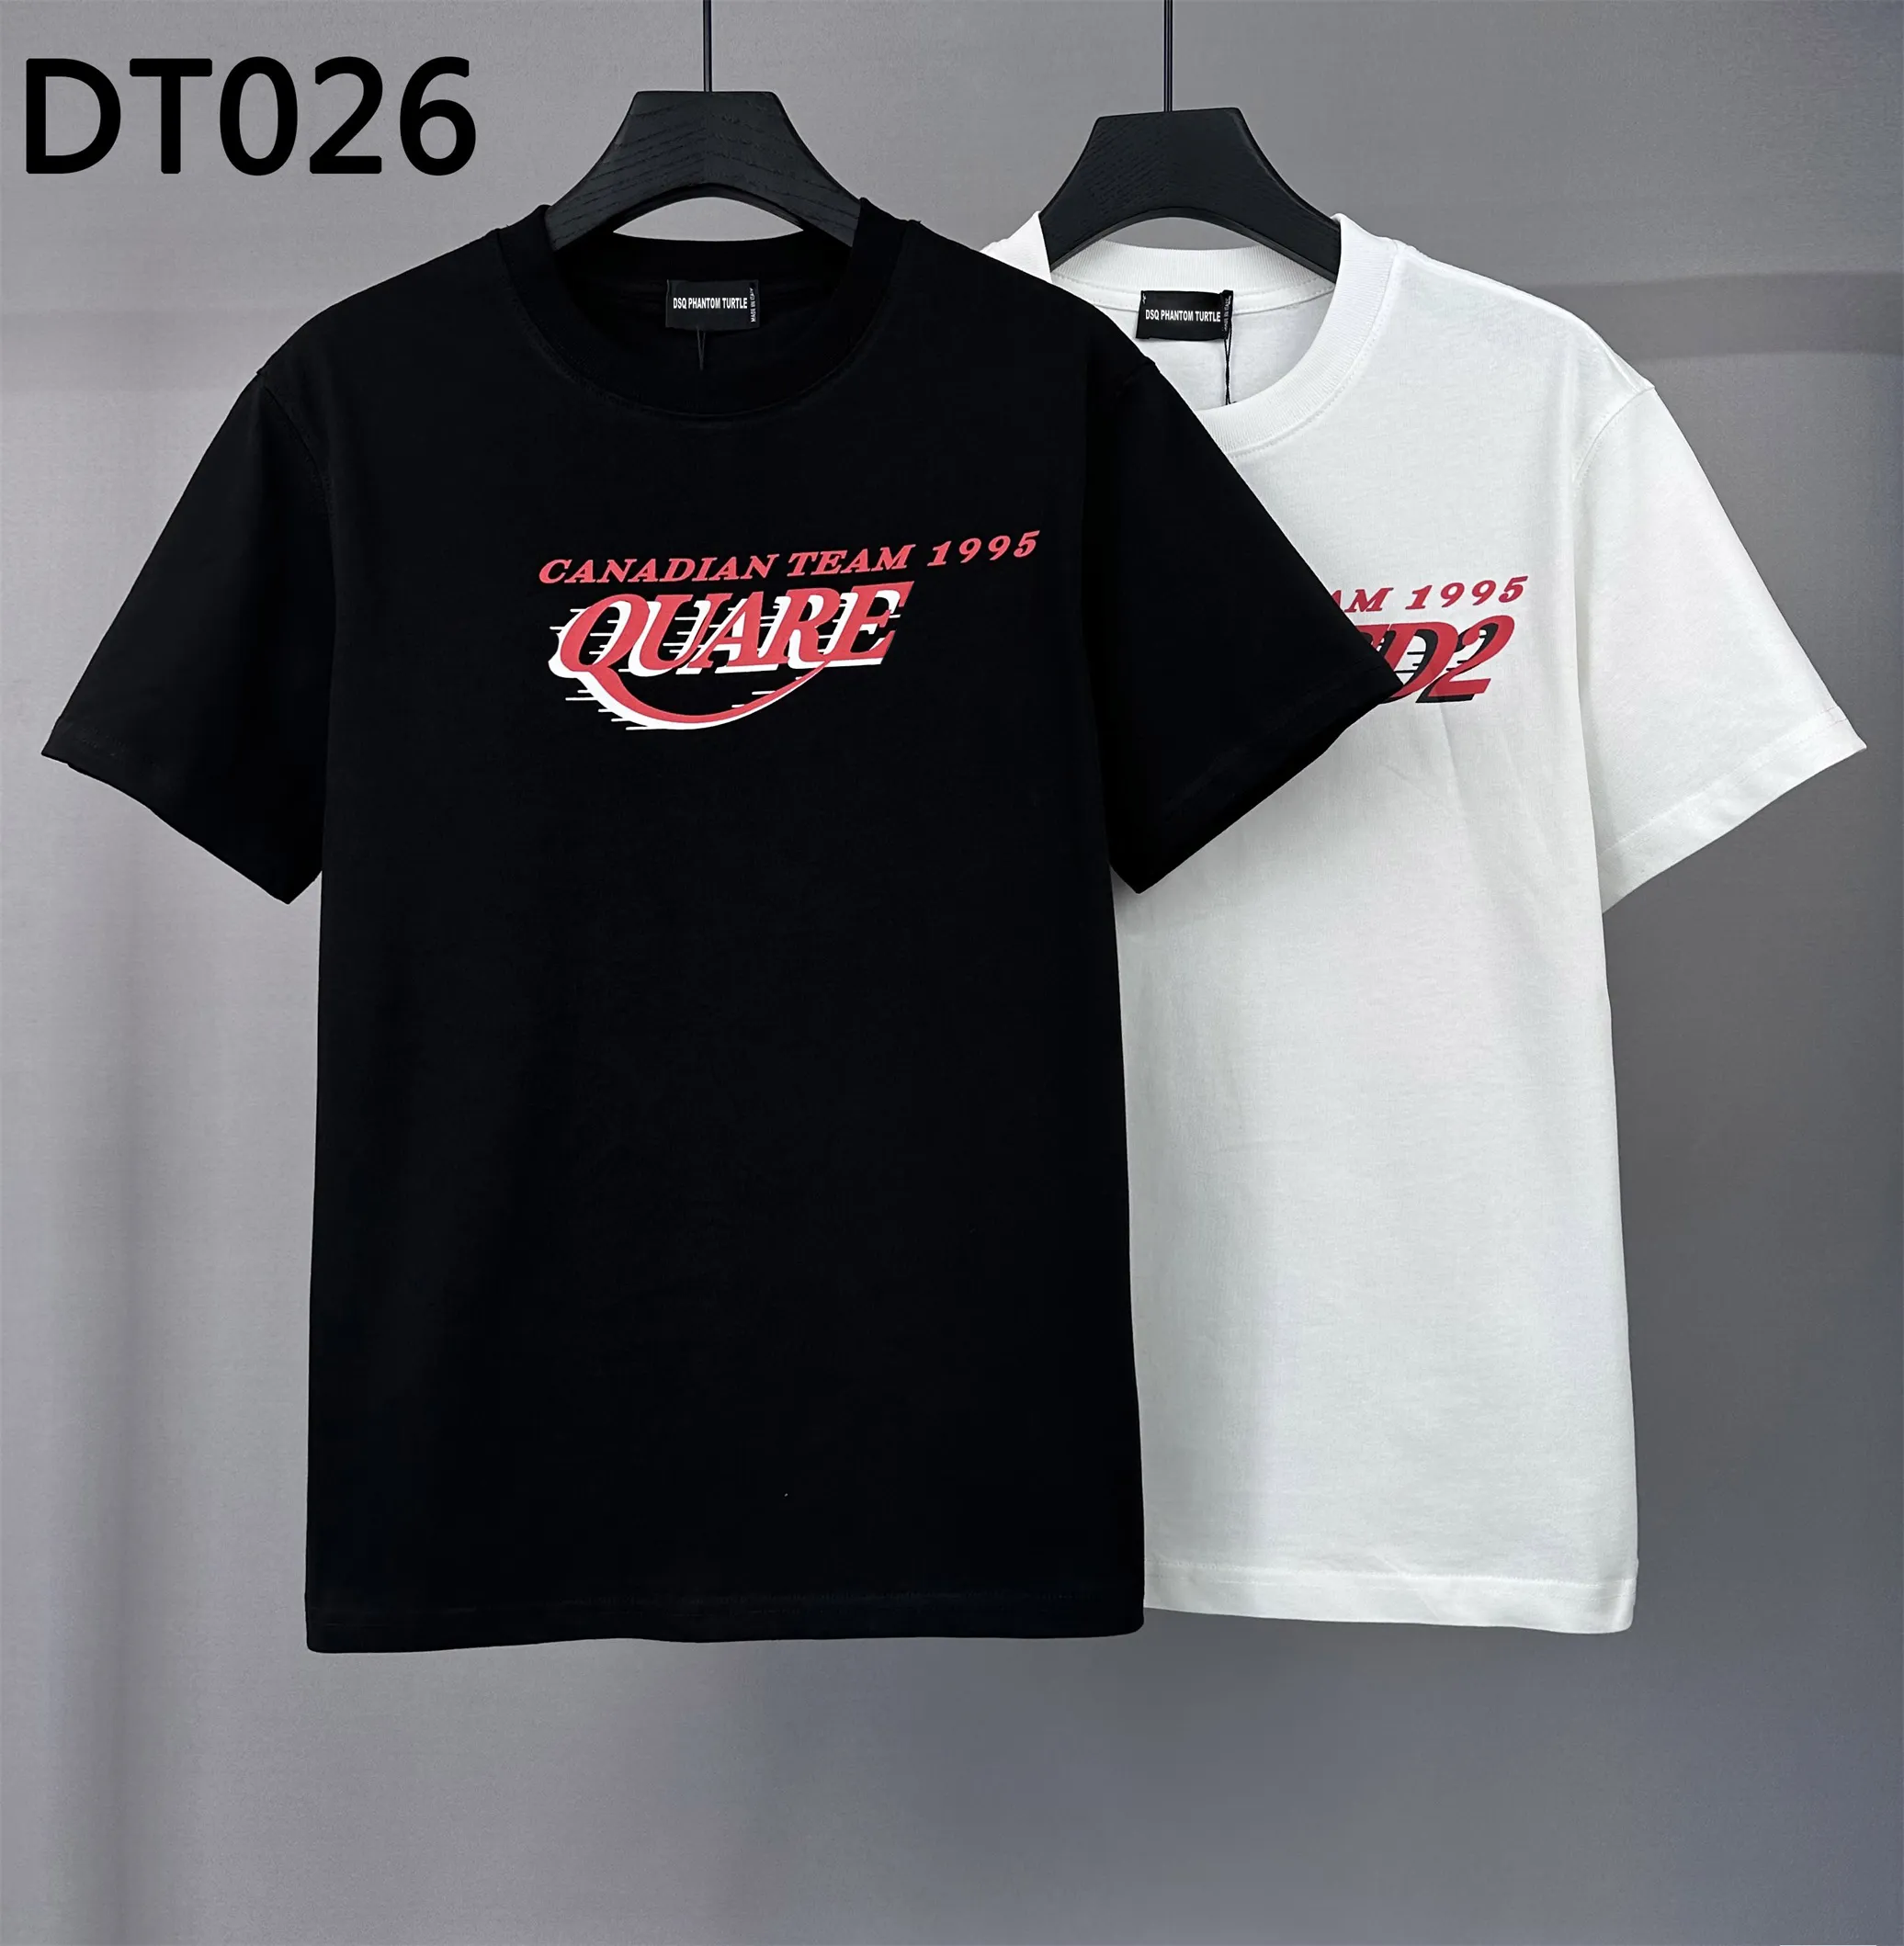 T-shirt maschile DSQ Phantom Turtle Mens Designer T-Shirt Black White Bianco Fangole Summer Italian Casual Street T-Shirt Tops Plus M-XXXL 6210